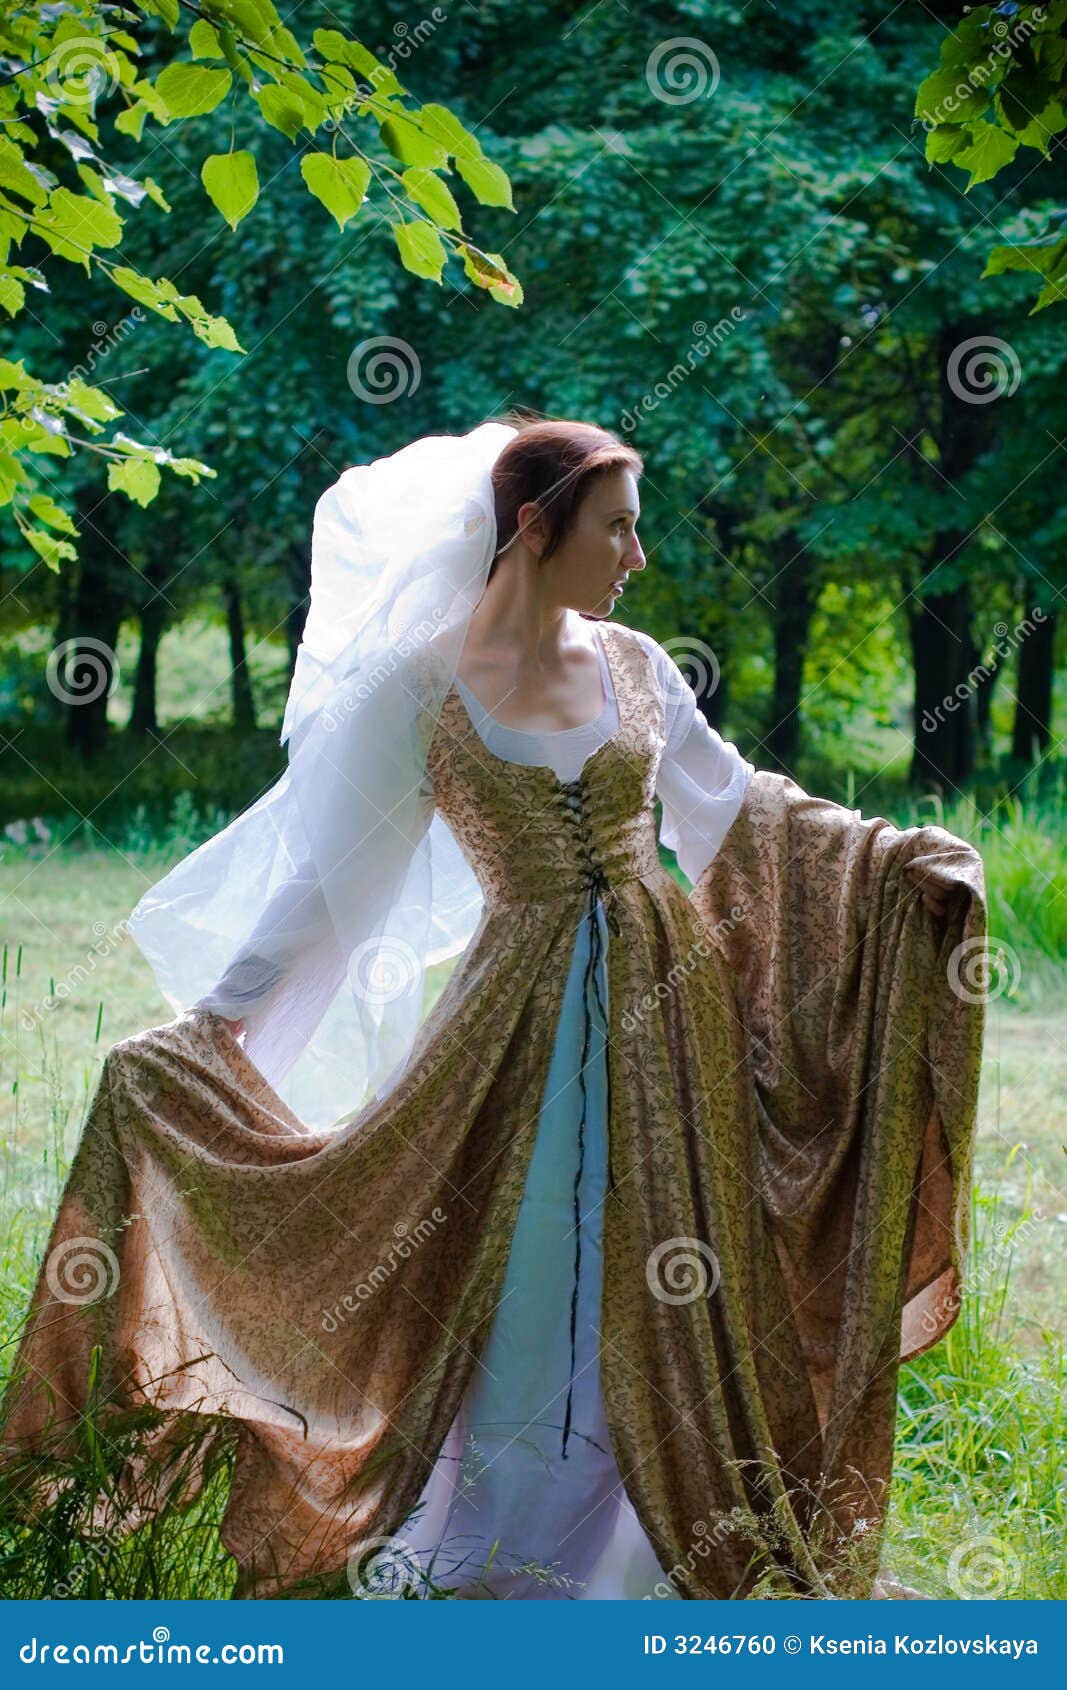 Italian renaissance dress stock photo ...